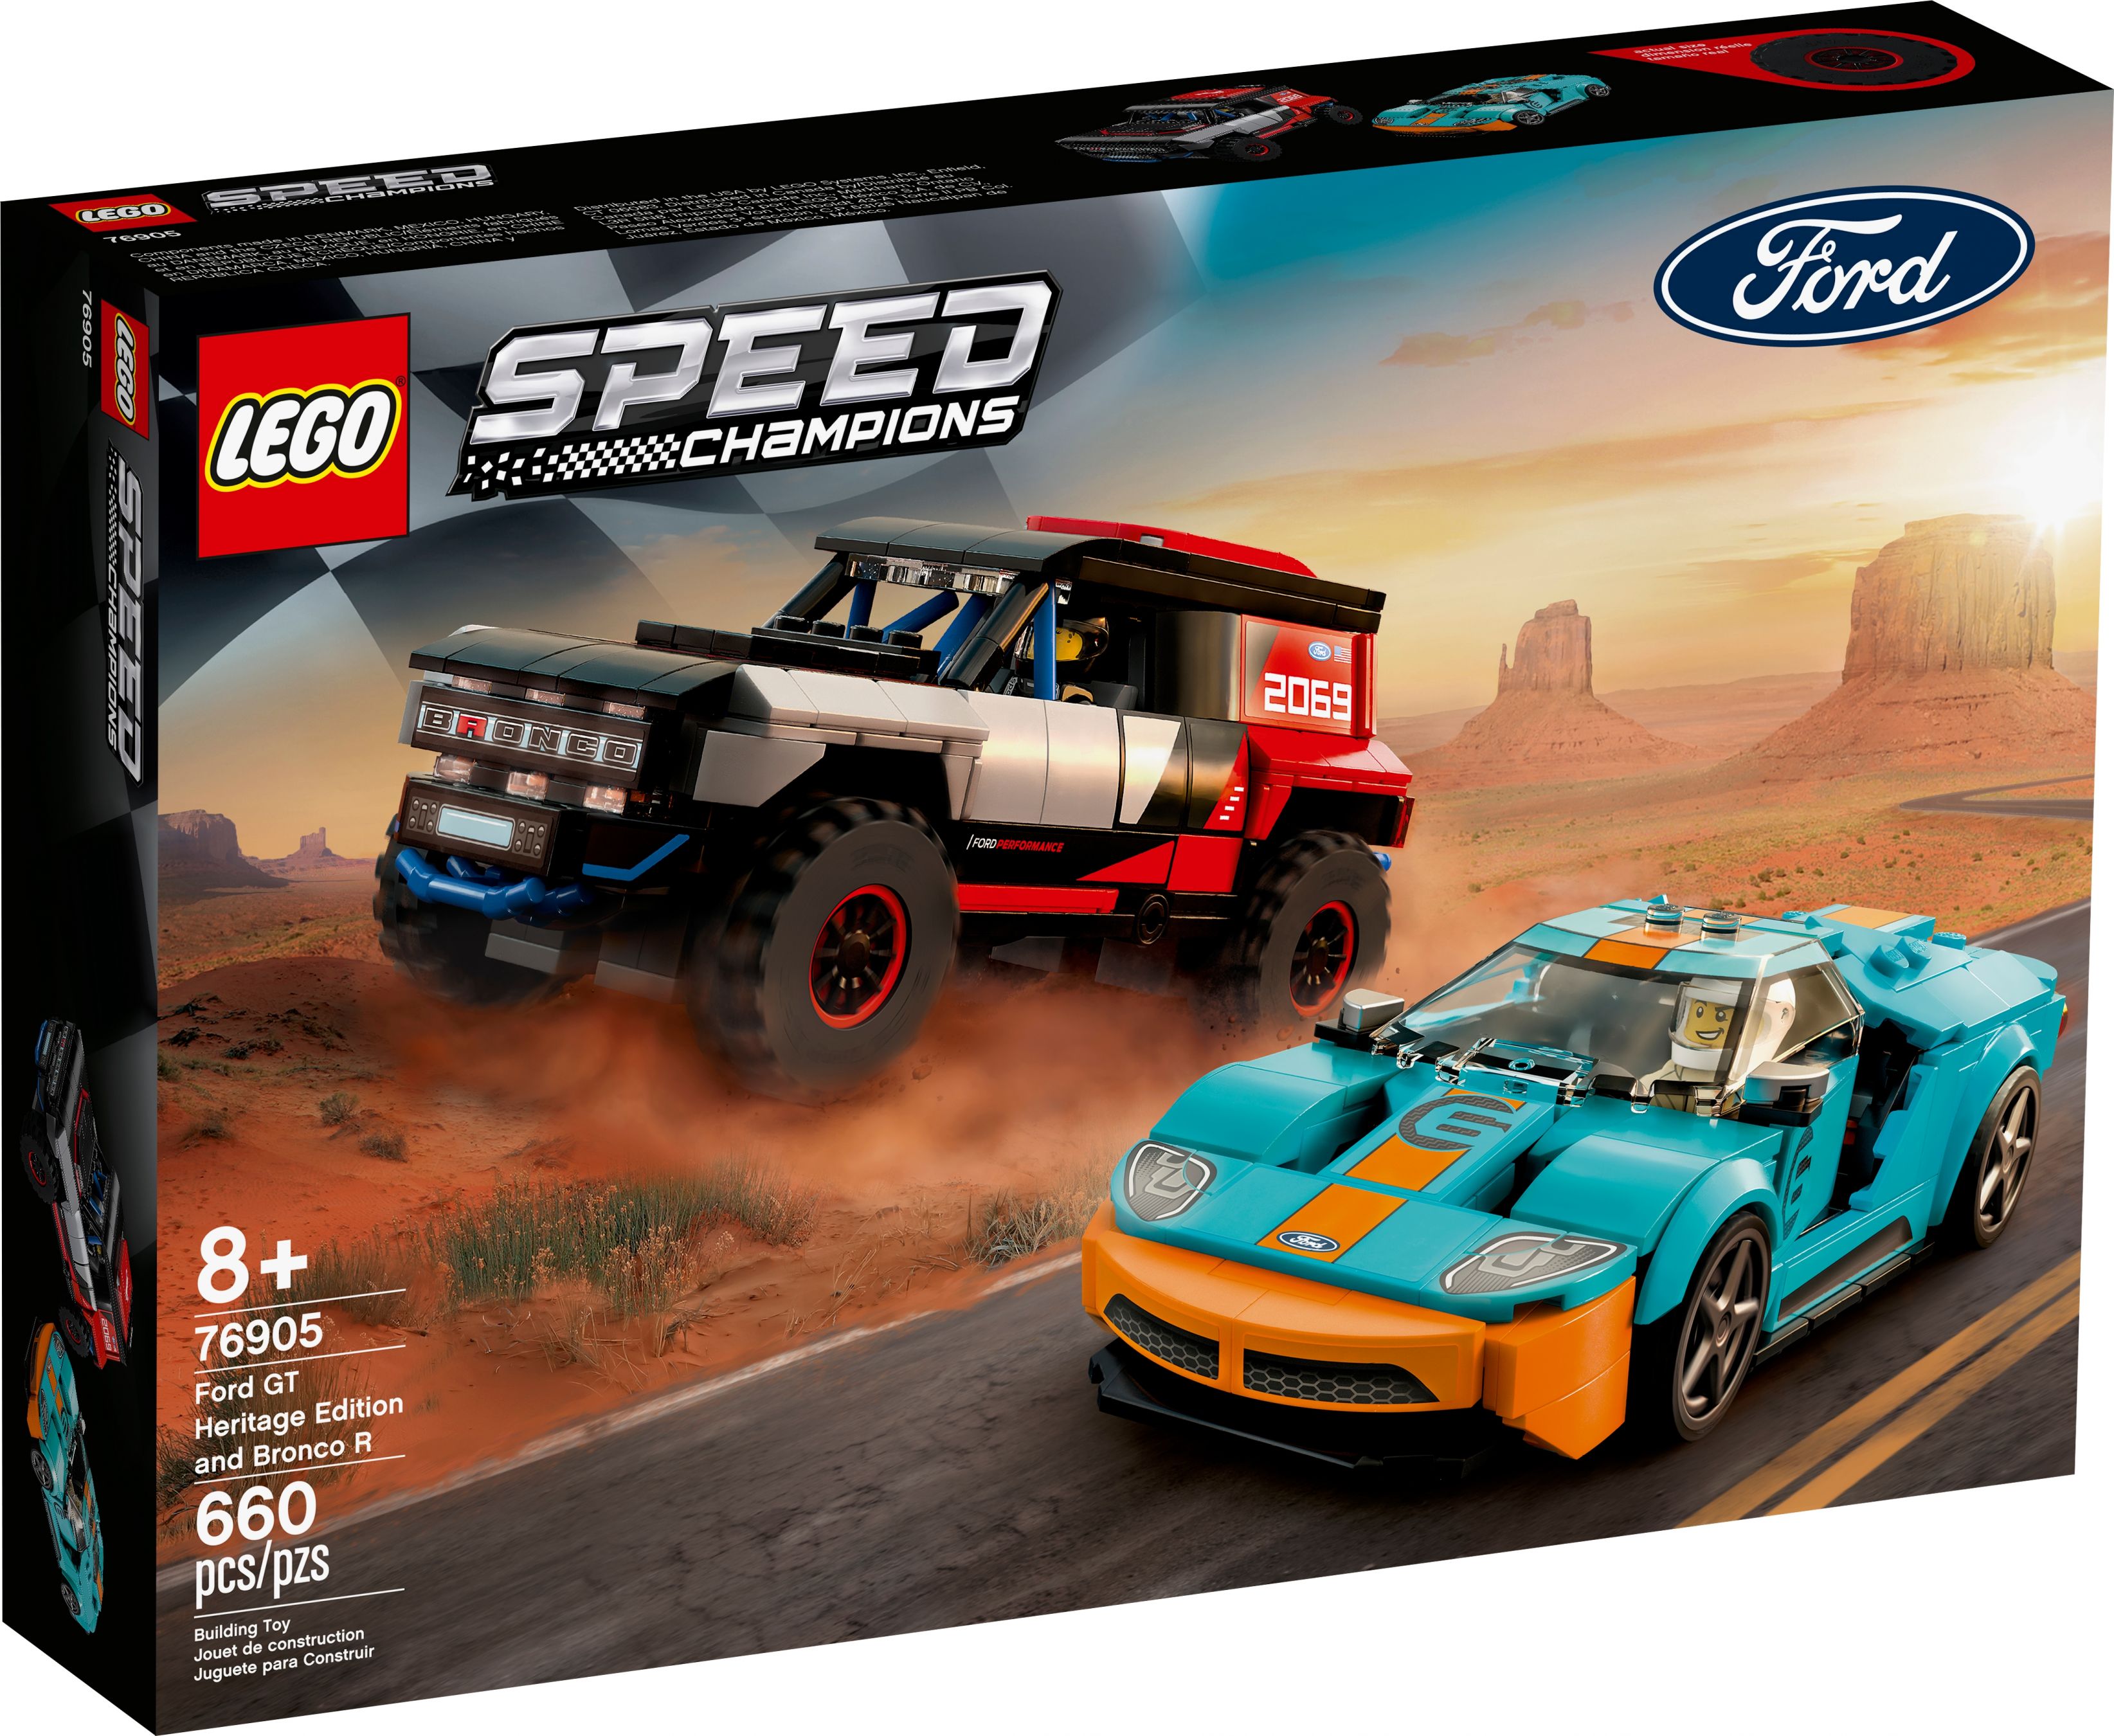 LEGO Speed Champions 76905 Ford GT Heritage Edition und Bronco R LEGO_76905_alt1.jpg